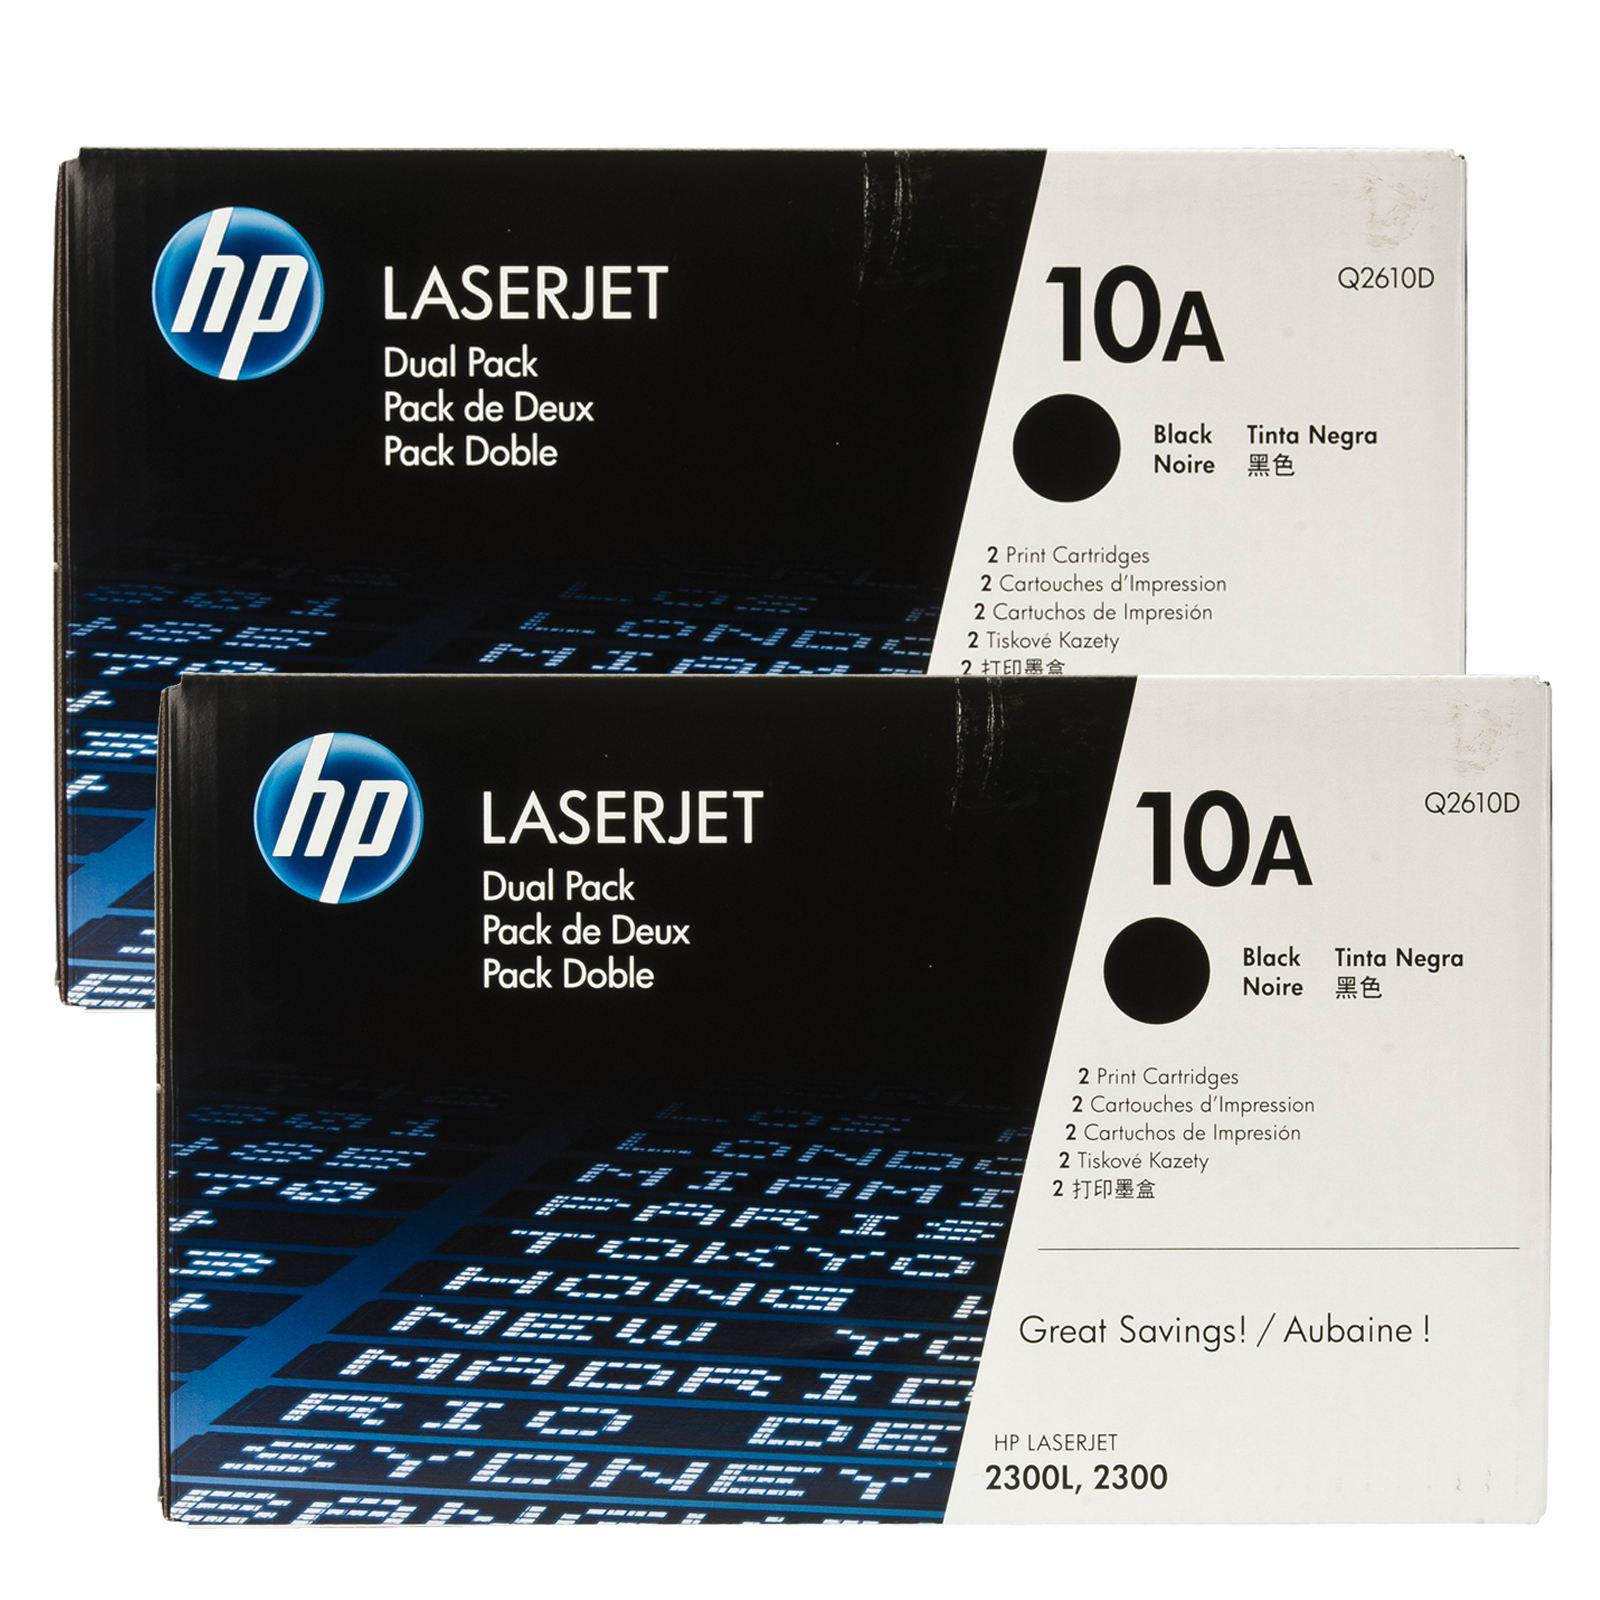 HP LaserJet Q2610D Dual Pack Black Print Cartridge